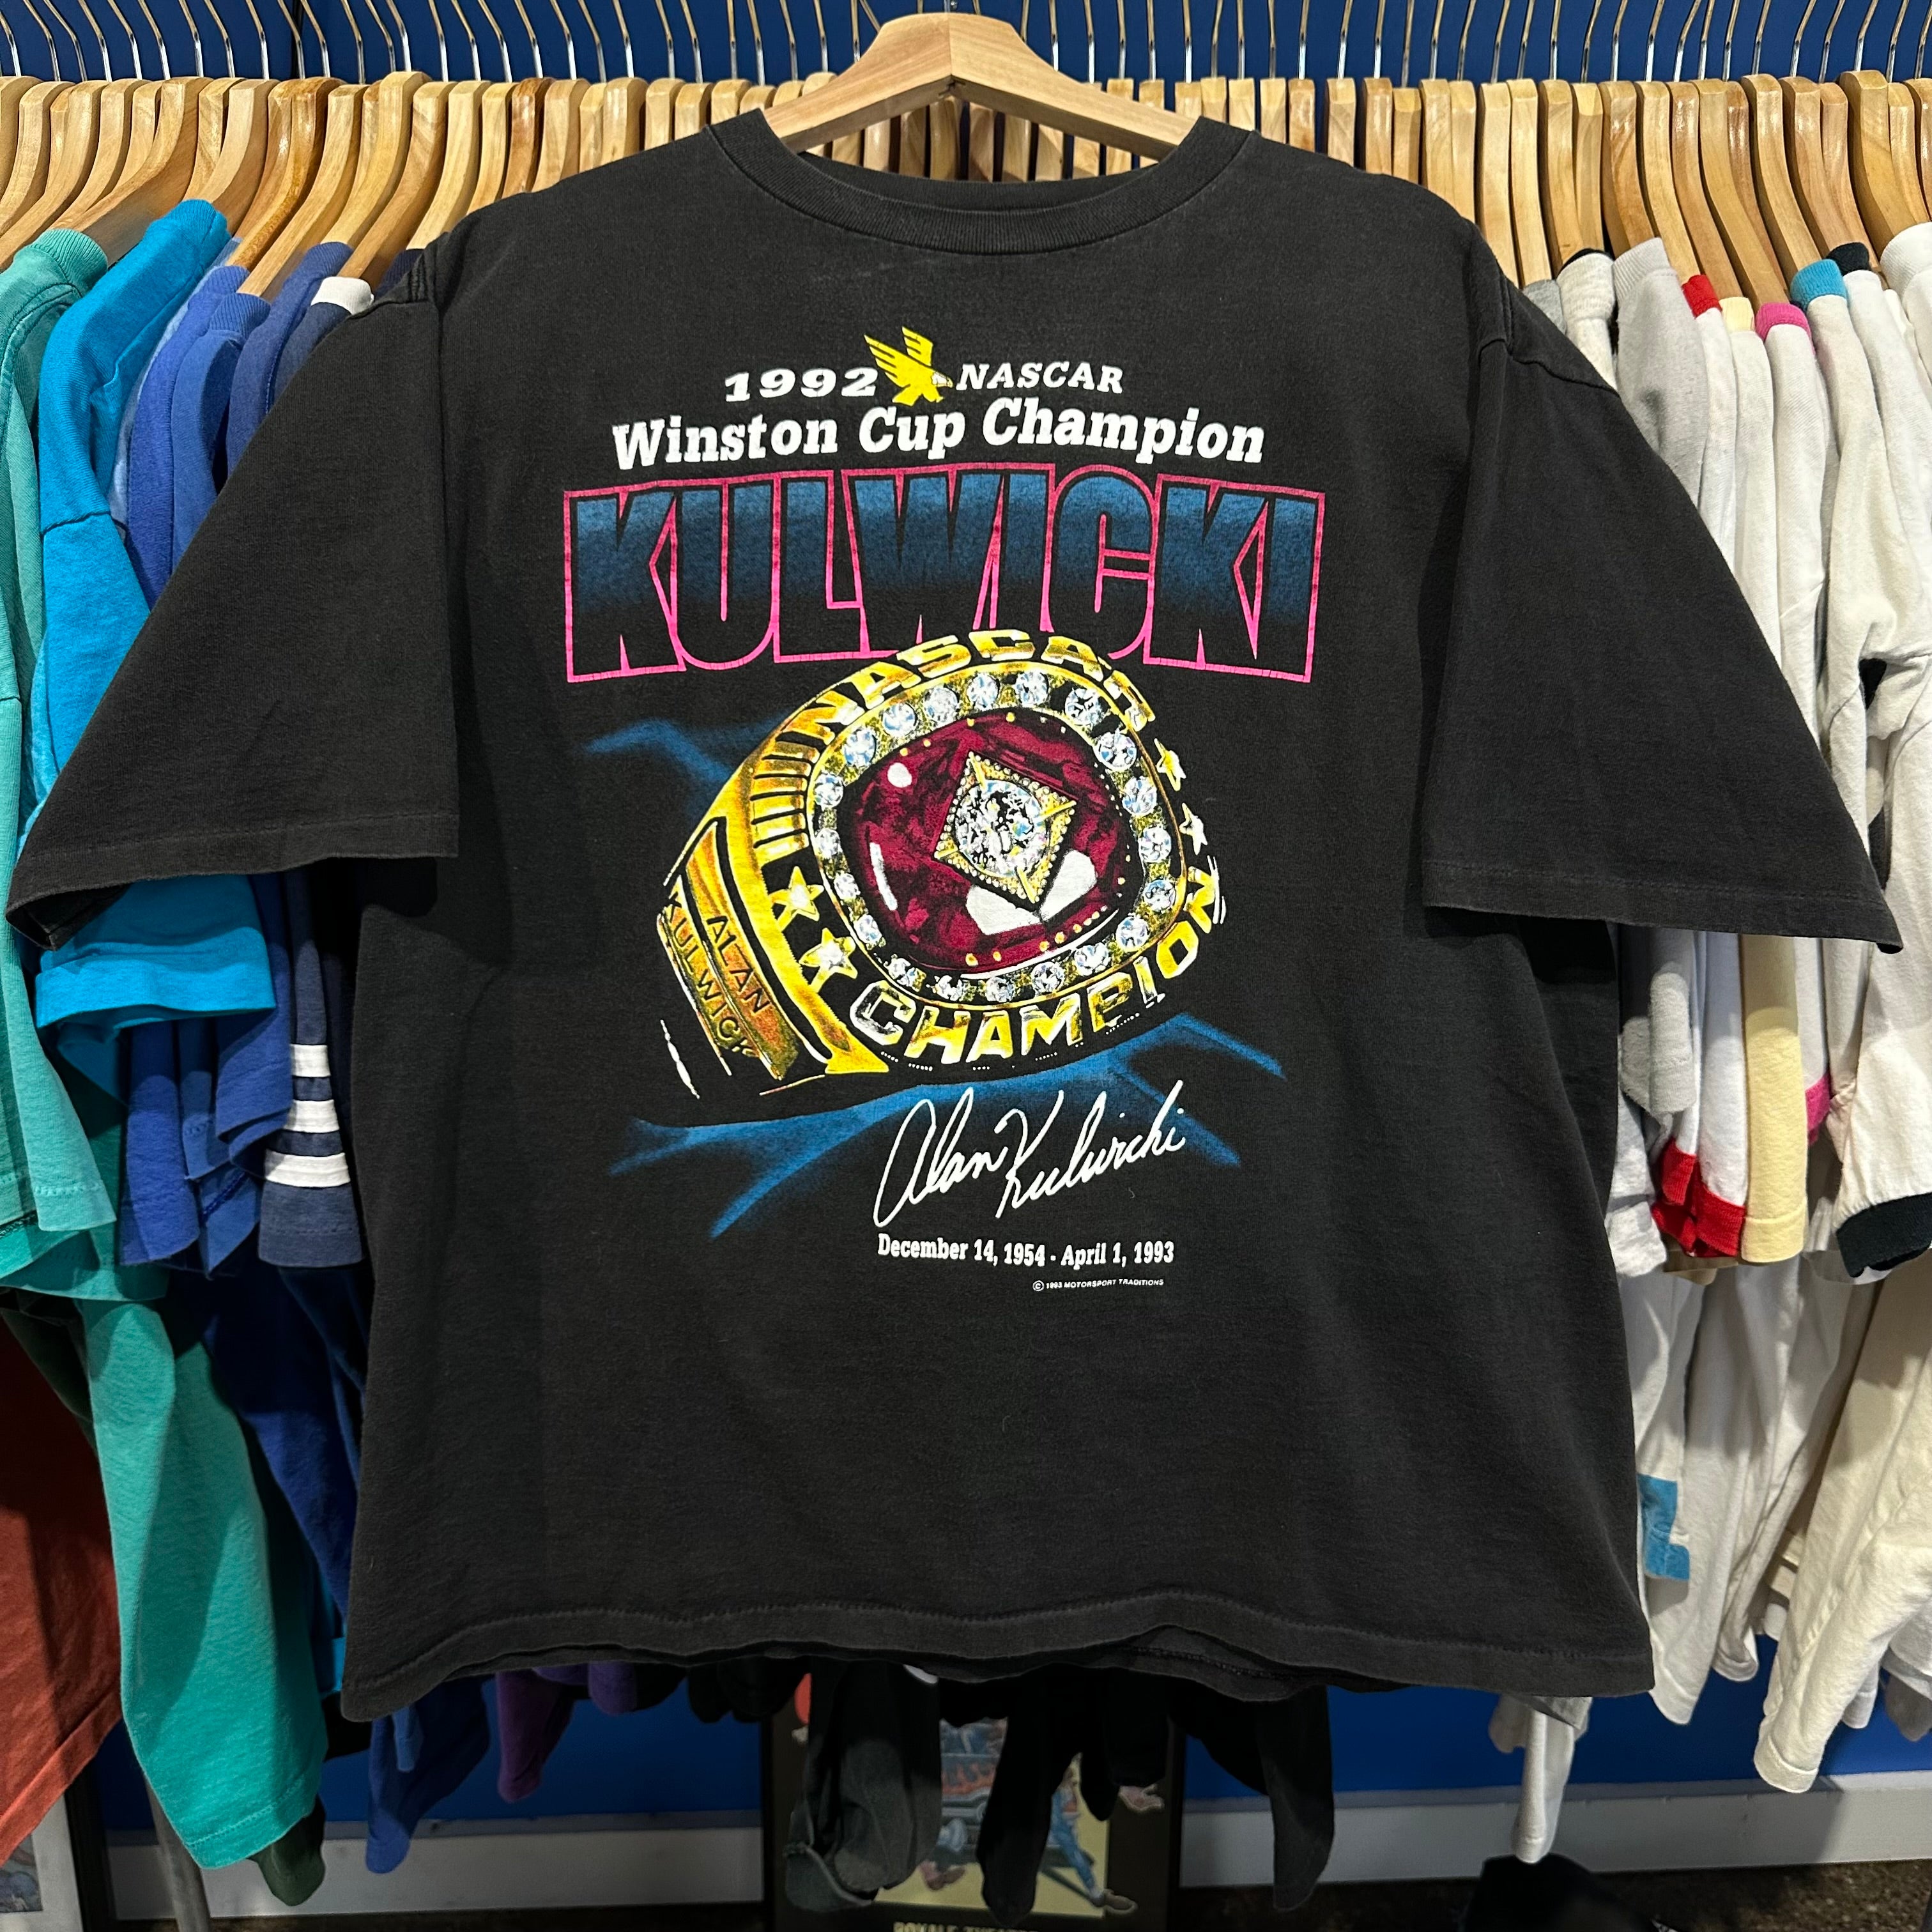 NASCAR 1992 Winston Cup T-Shirt